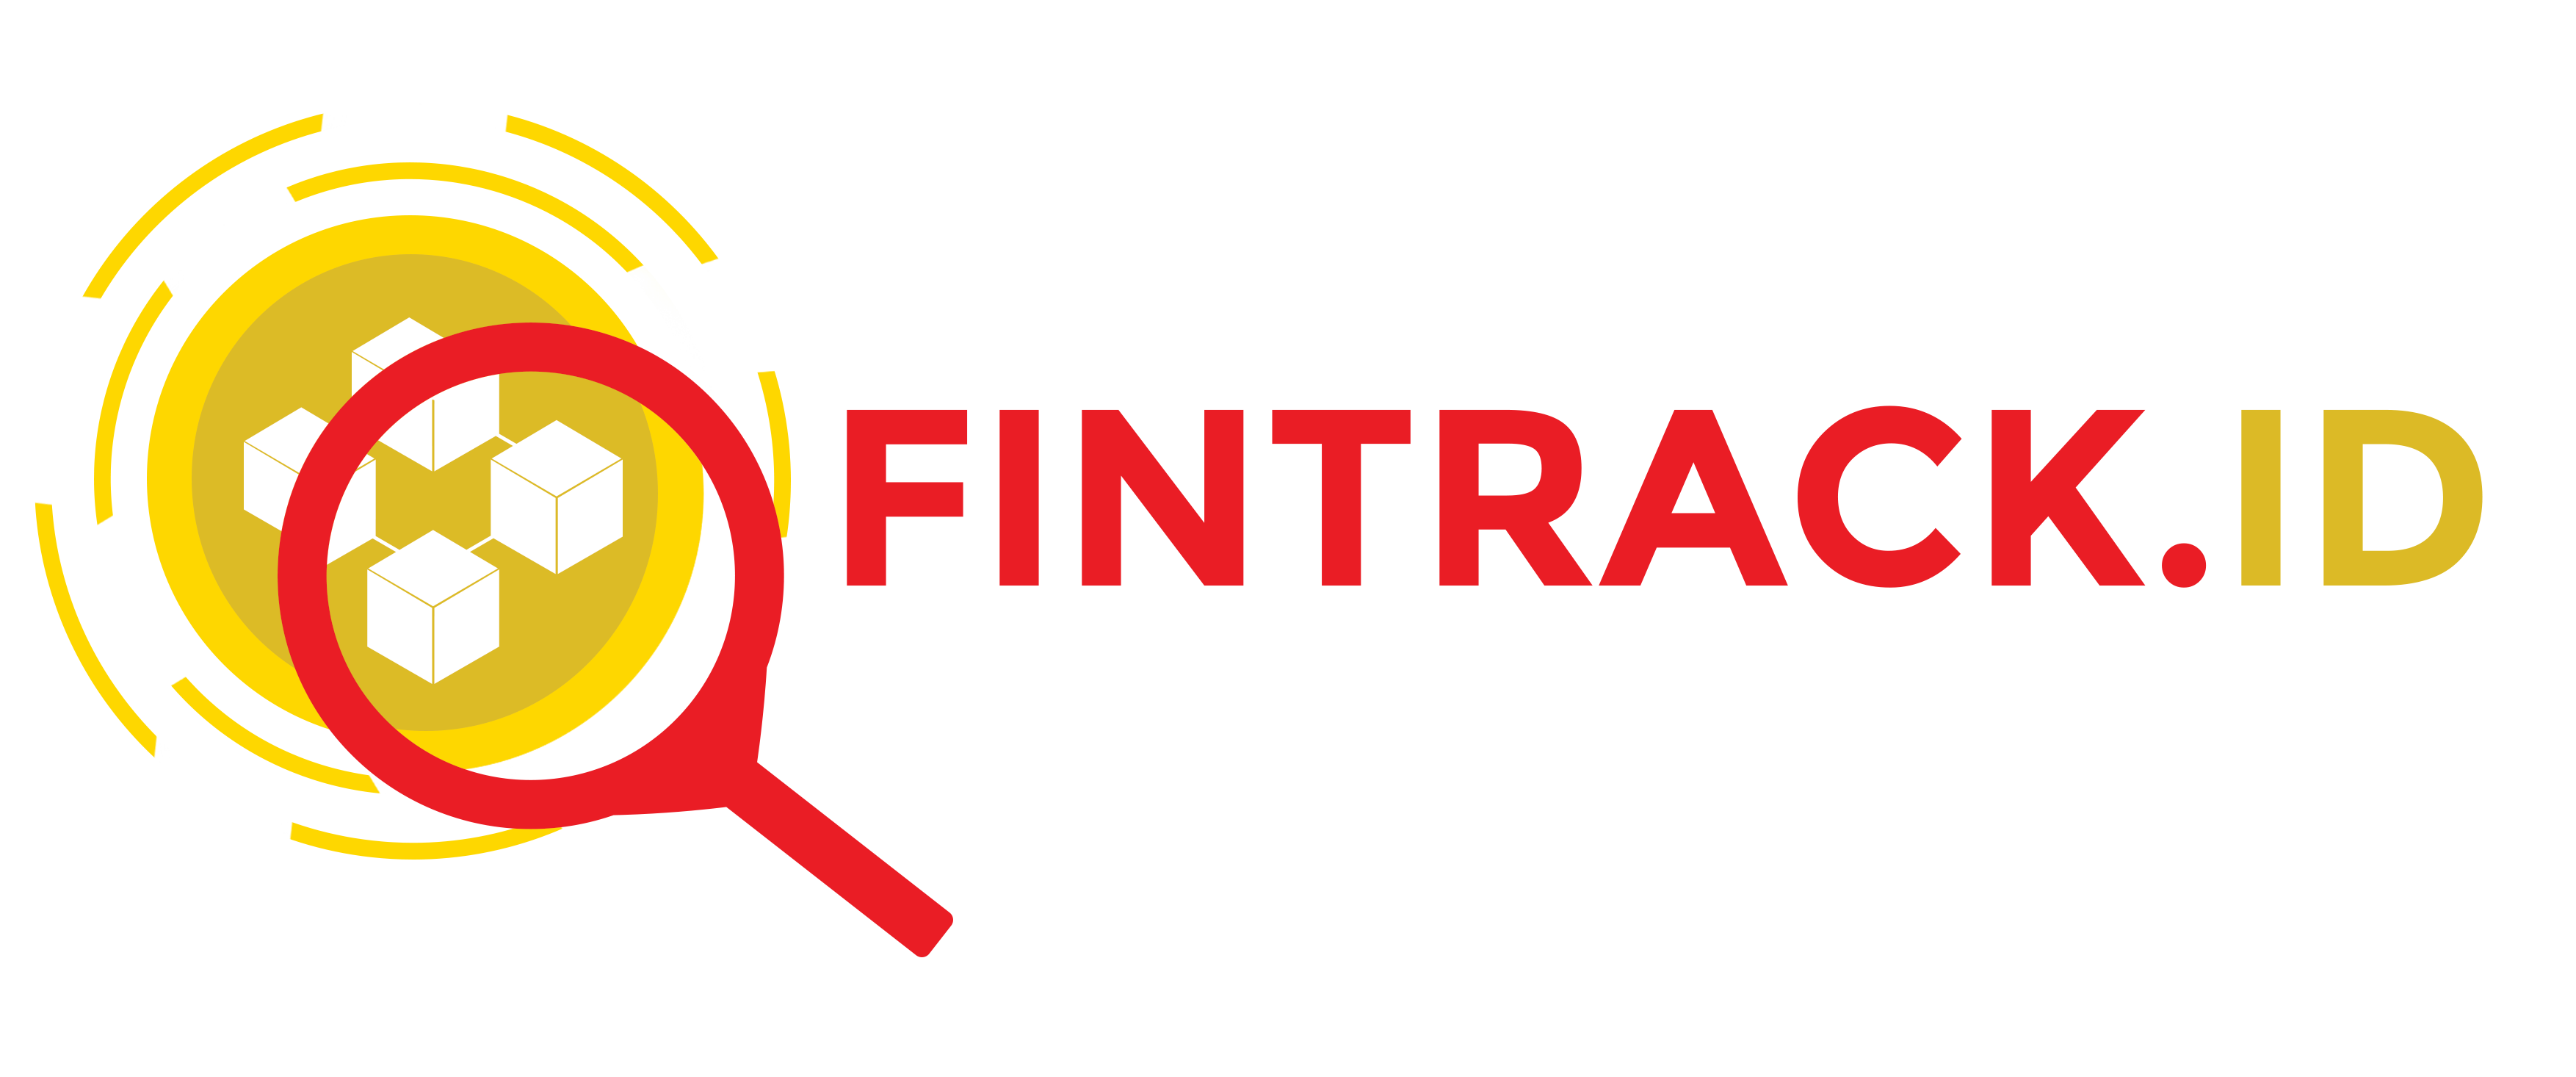 FinTrack.id